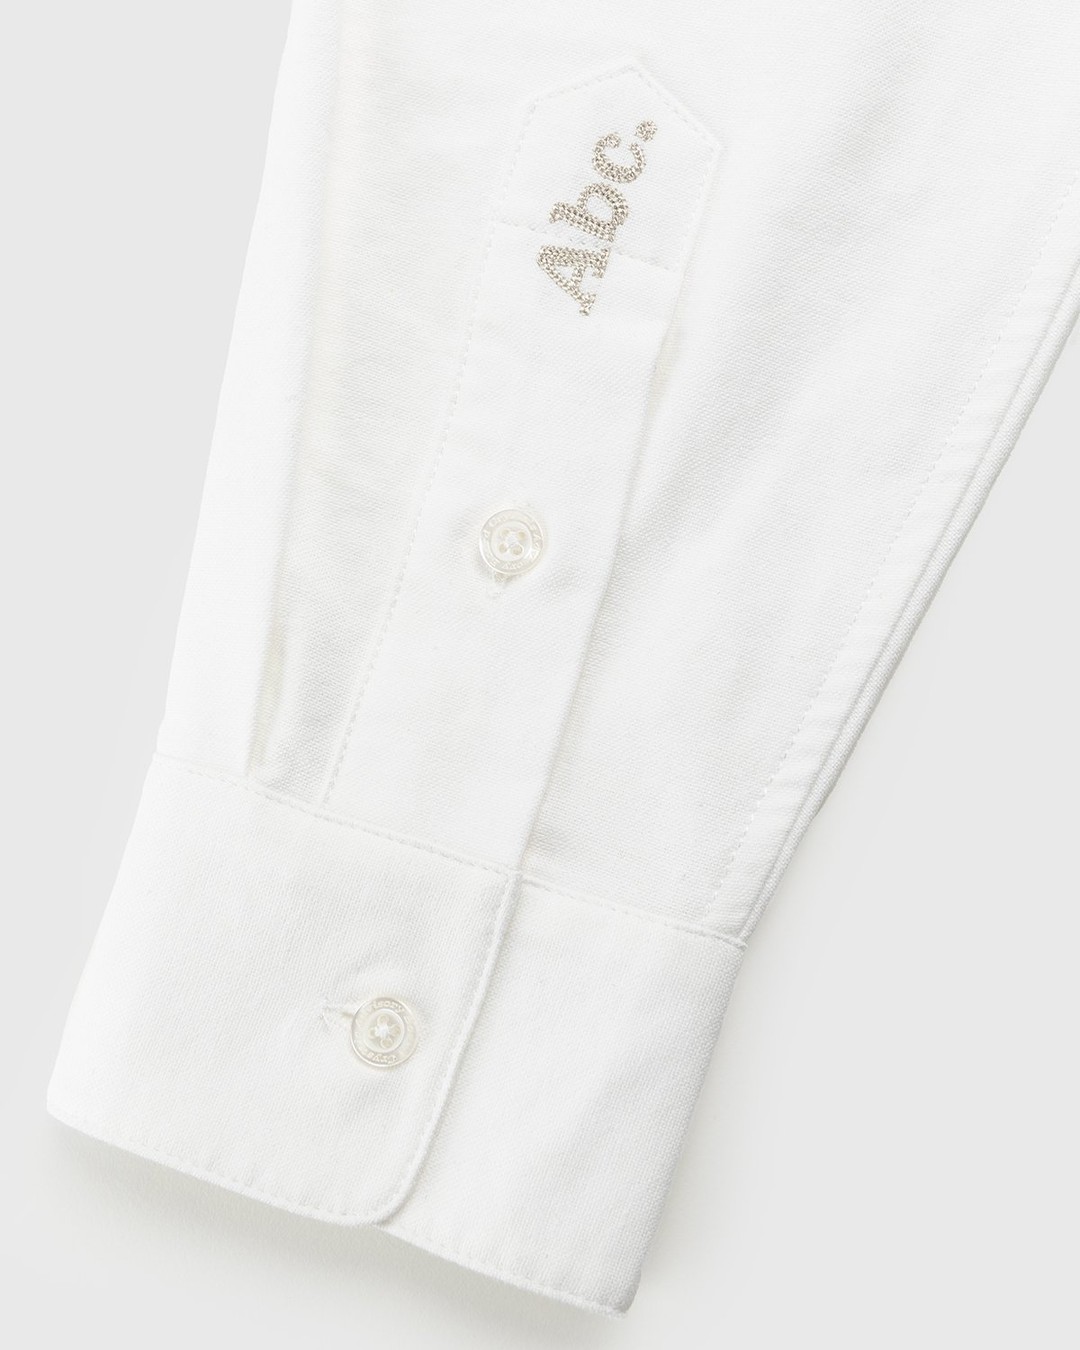 Abc. – Oxford Woven Shirt Selenite - Longsleeve Shirts - White - Image 6